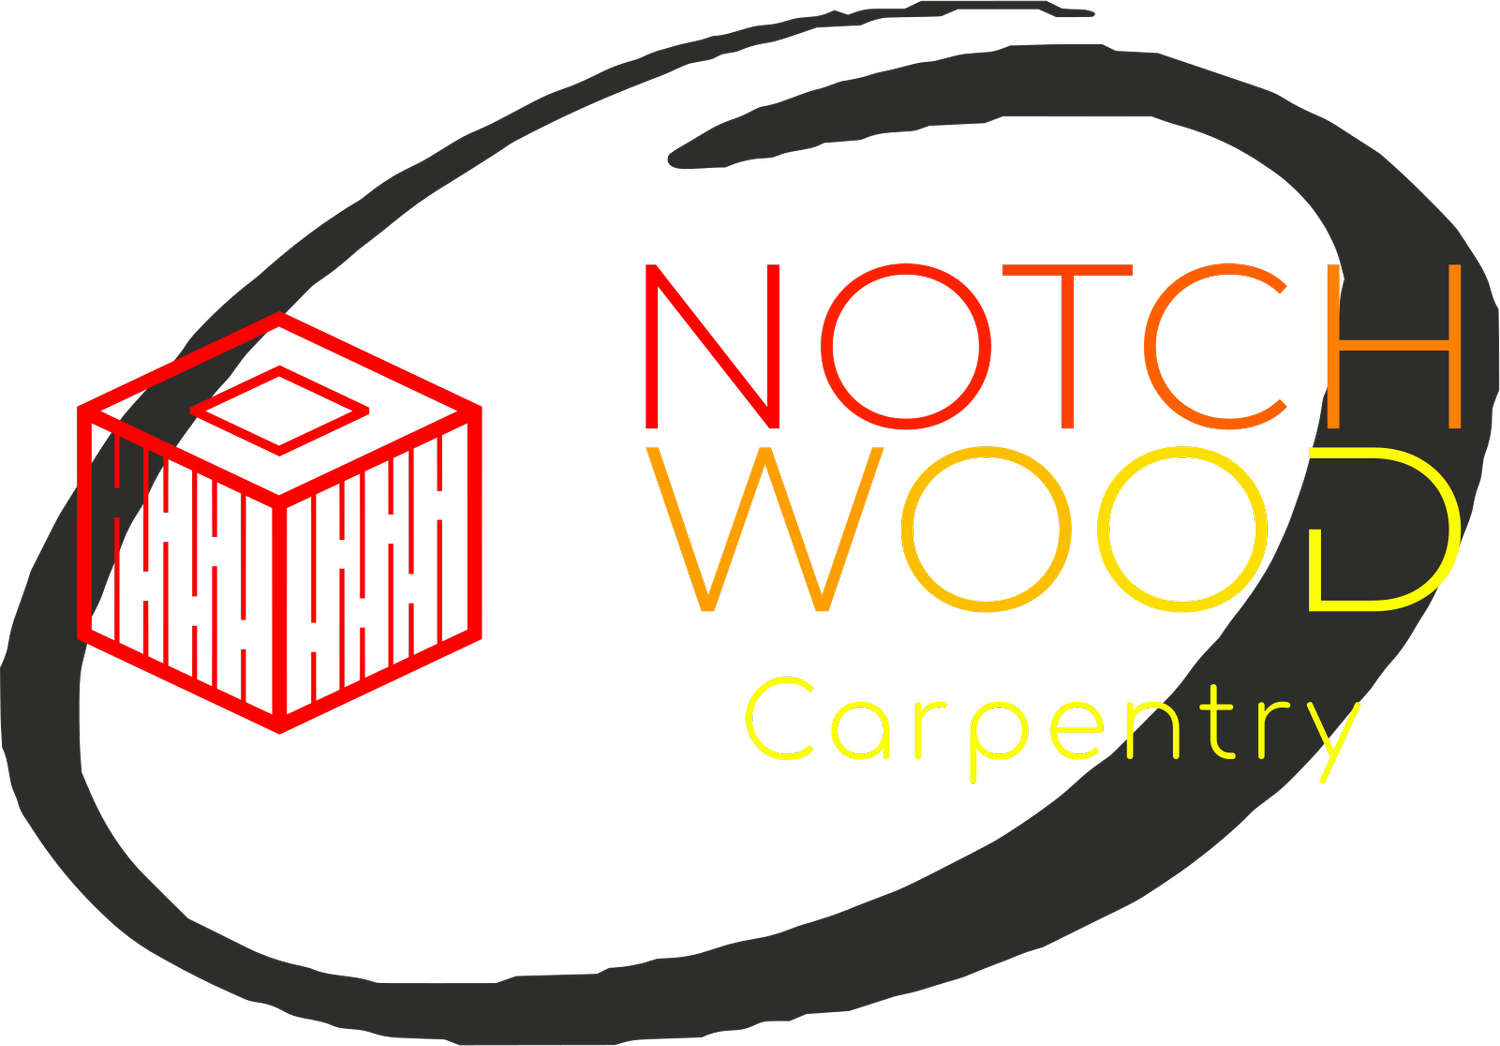 NotchWood Carpentry